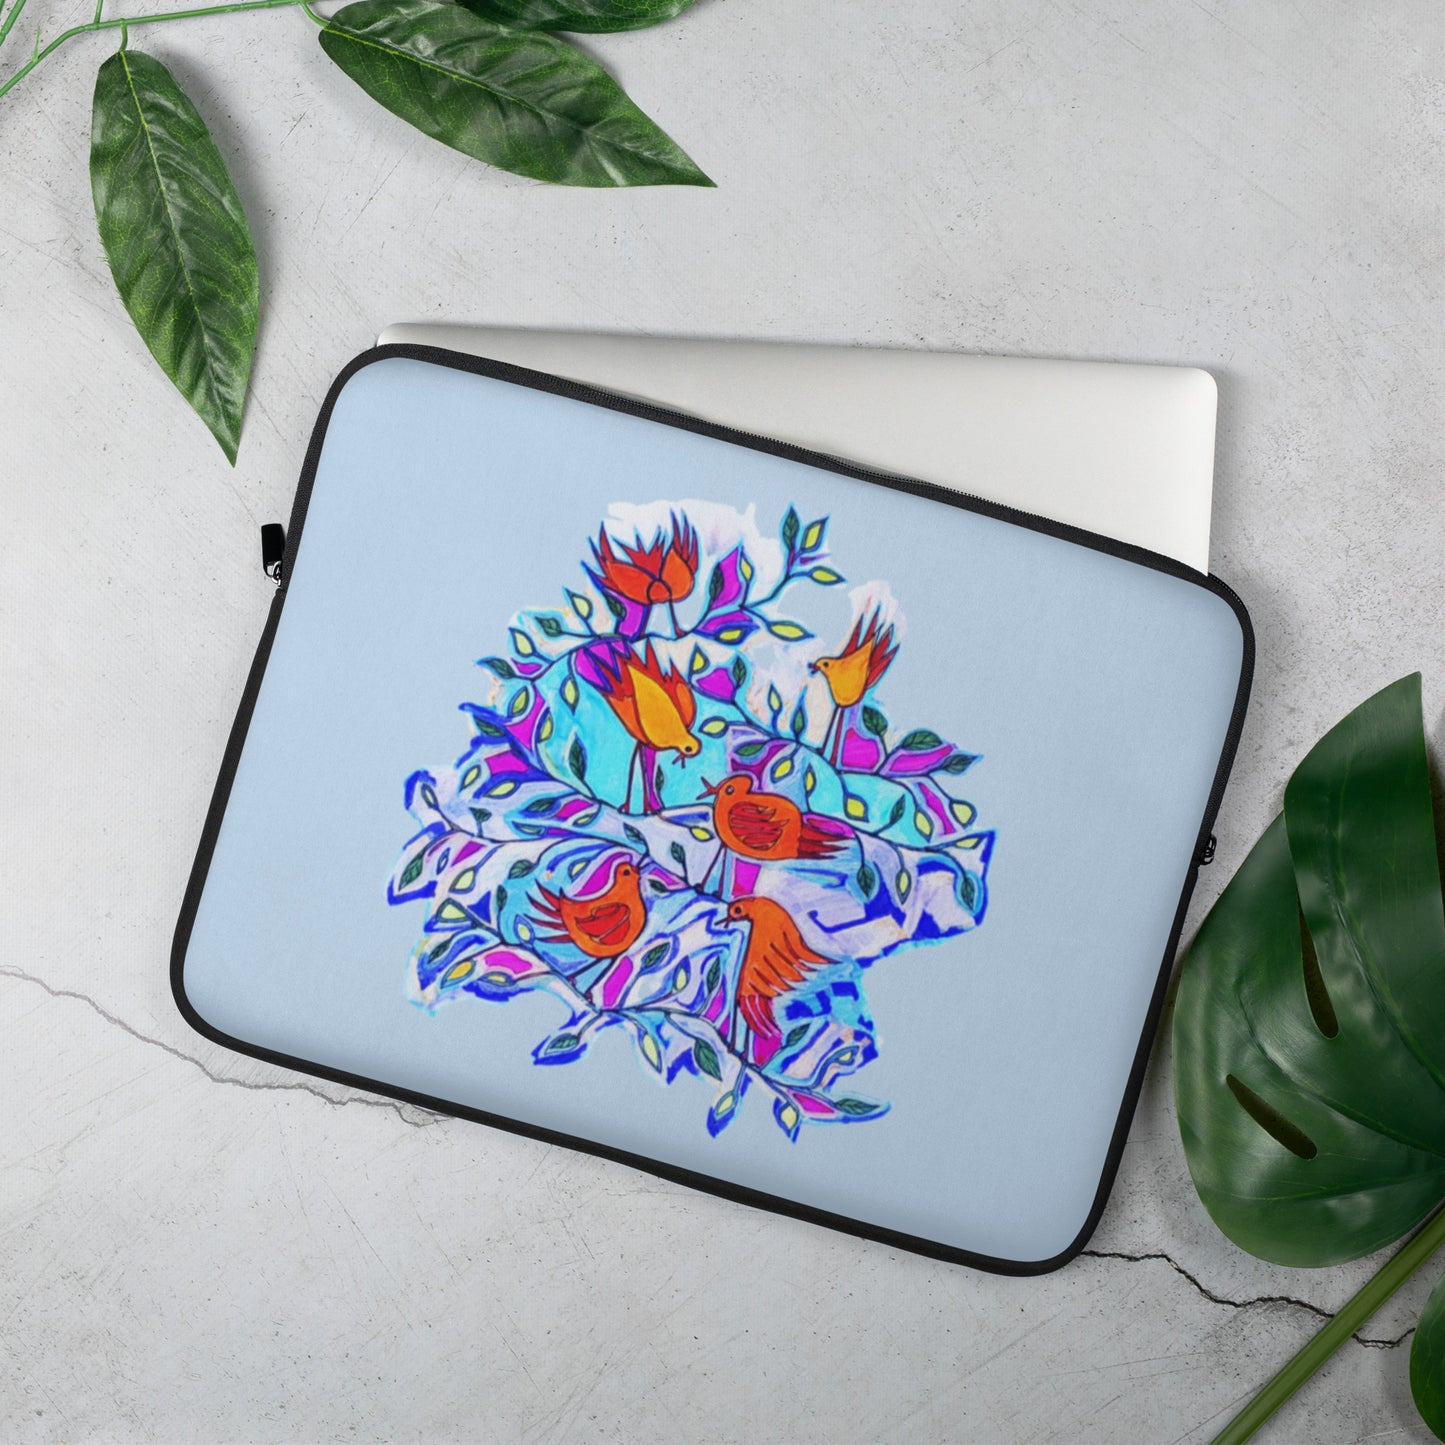 Six Tree Birds Laptop Sleeve - Art Love Decor